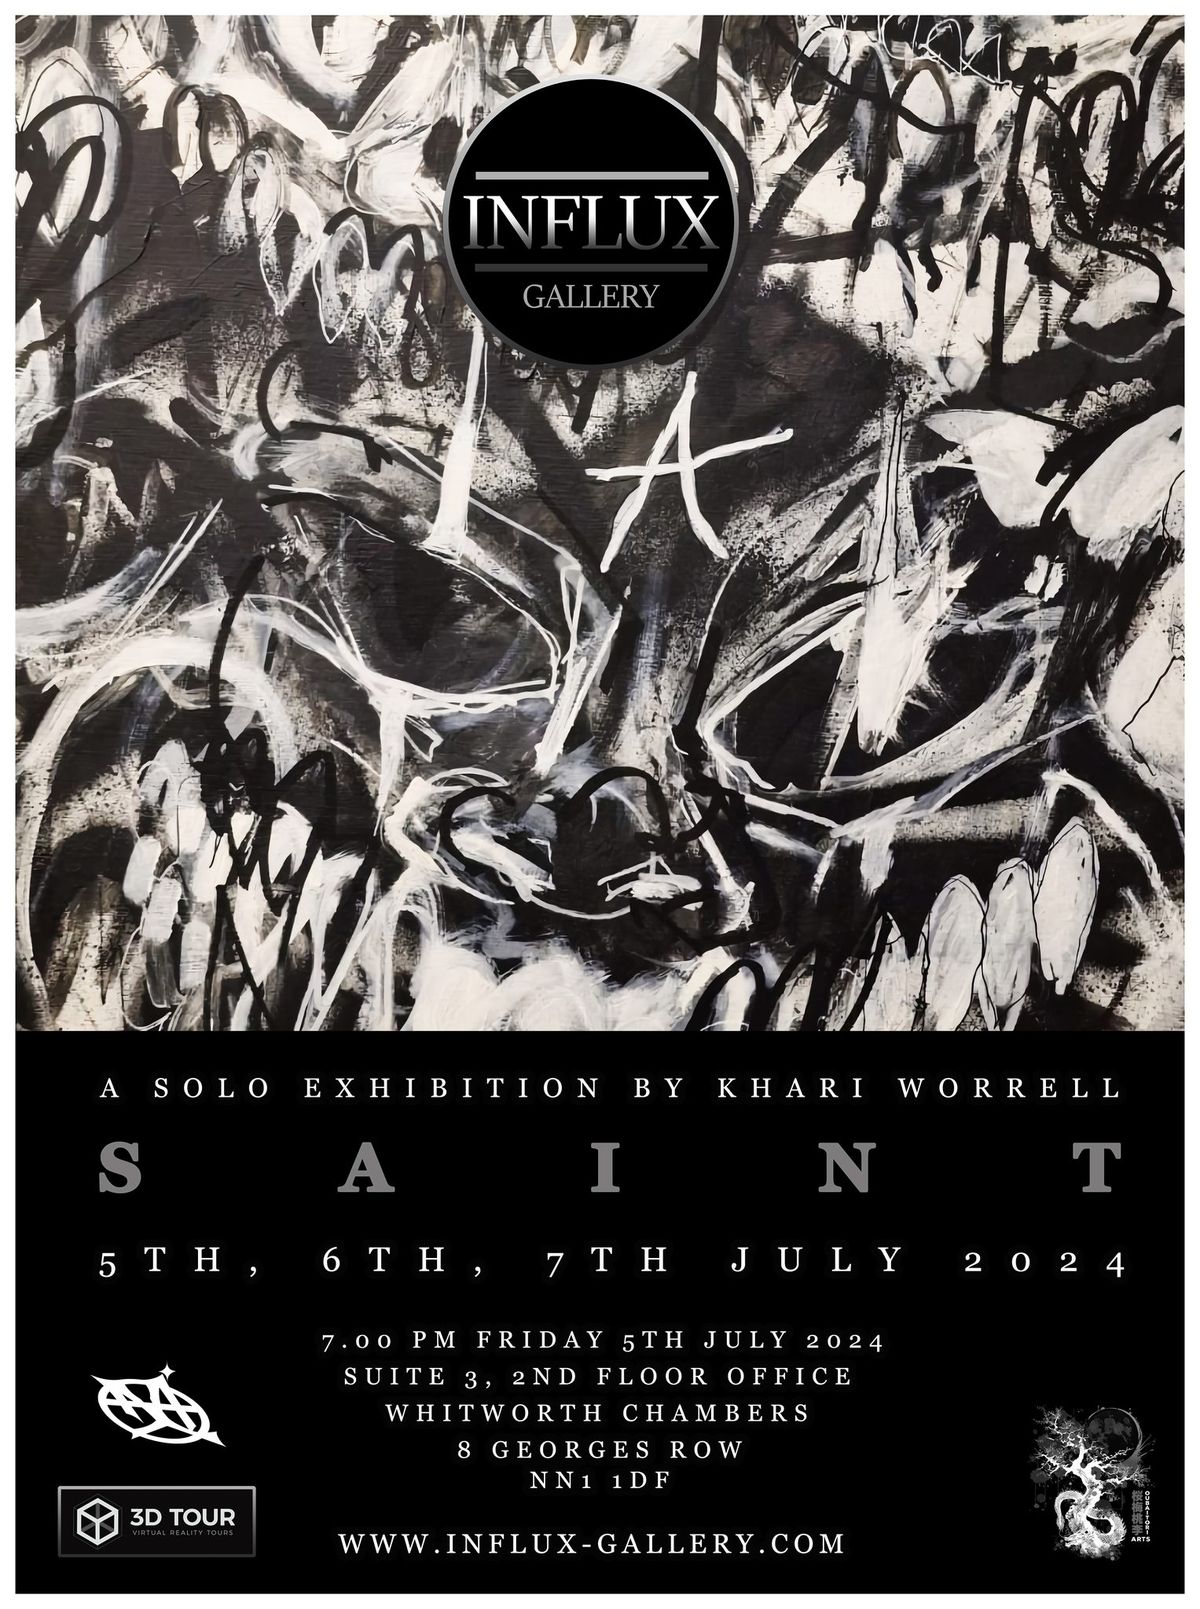 "SAINT" ART EXHIBITION BY KHARI WORRELL